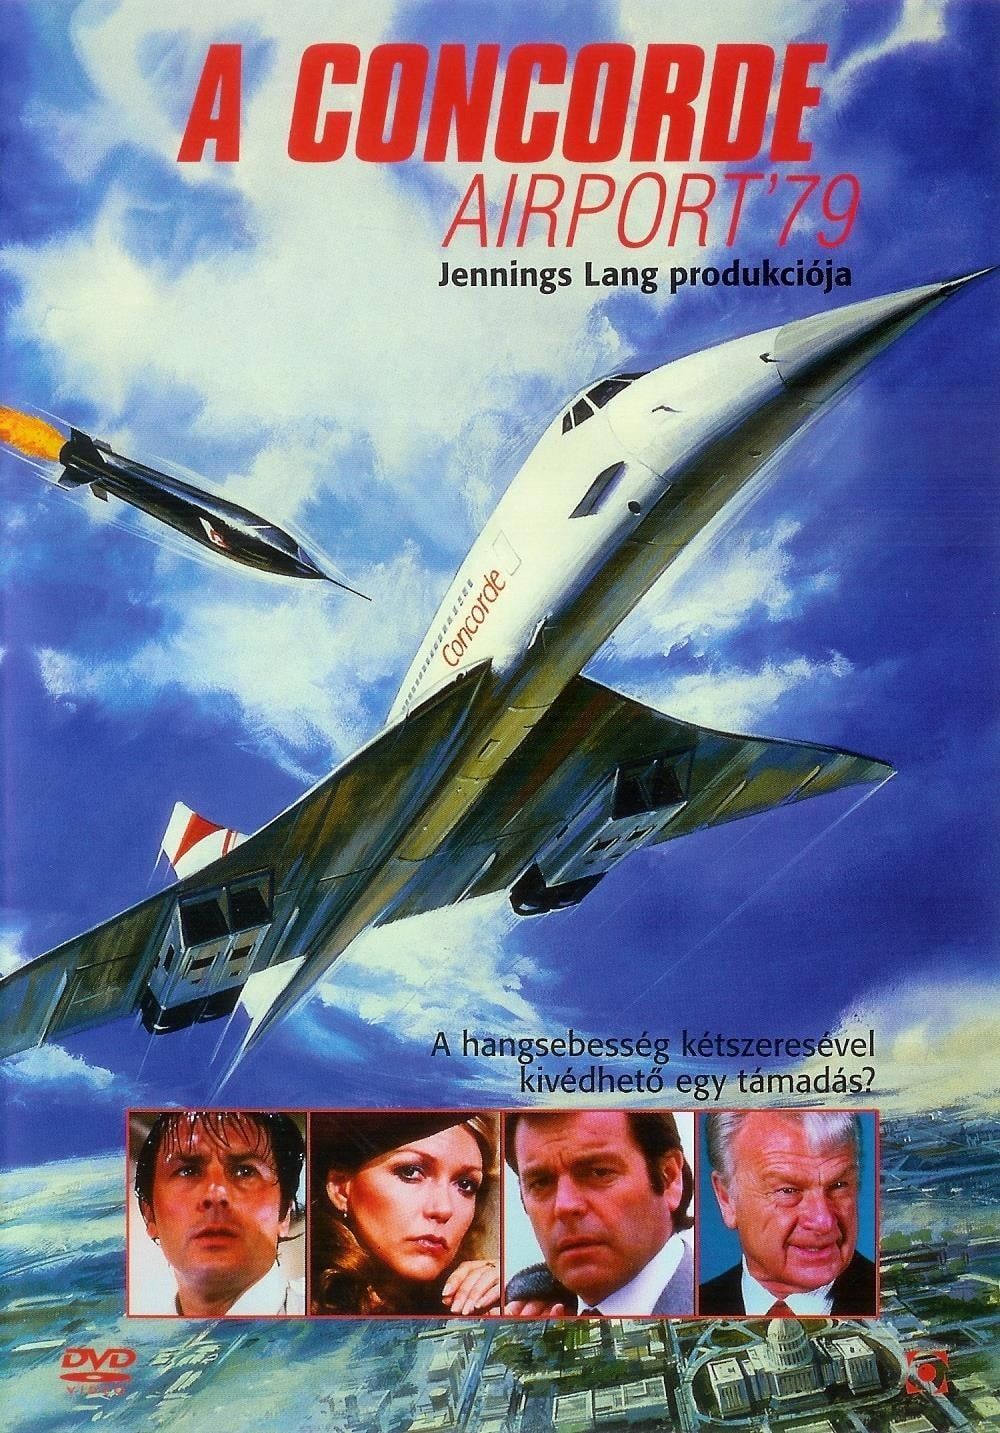 Airport '79 - Concorde online film